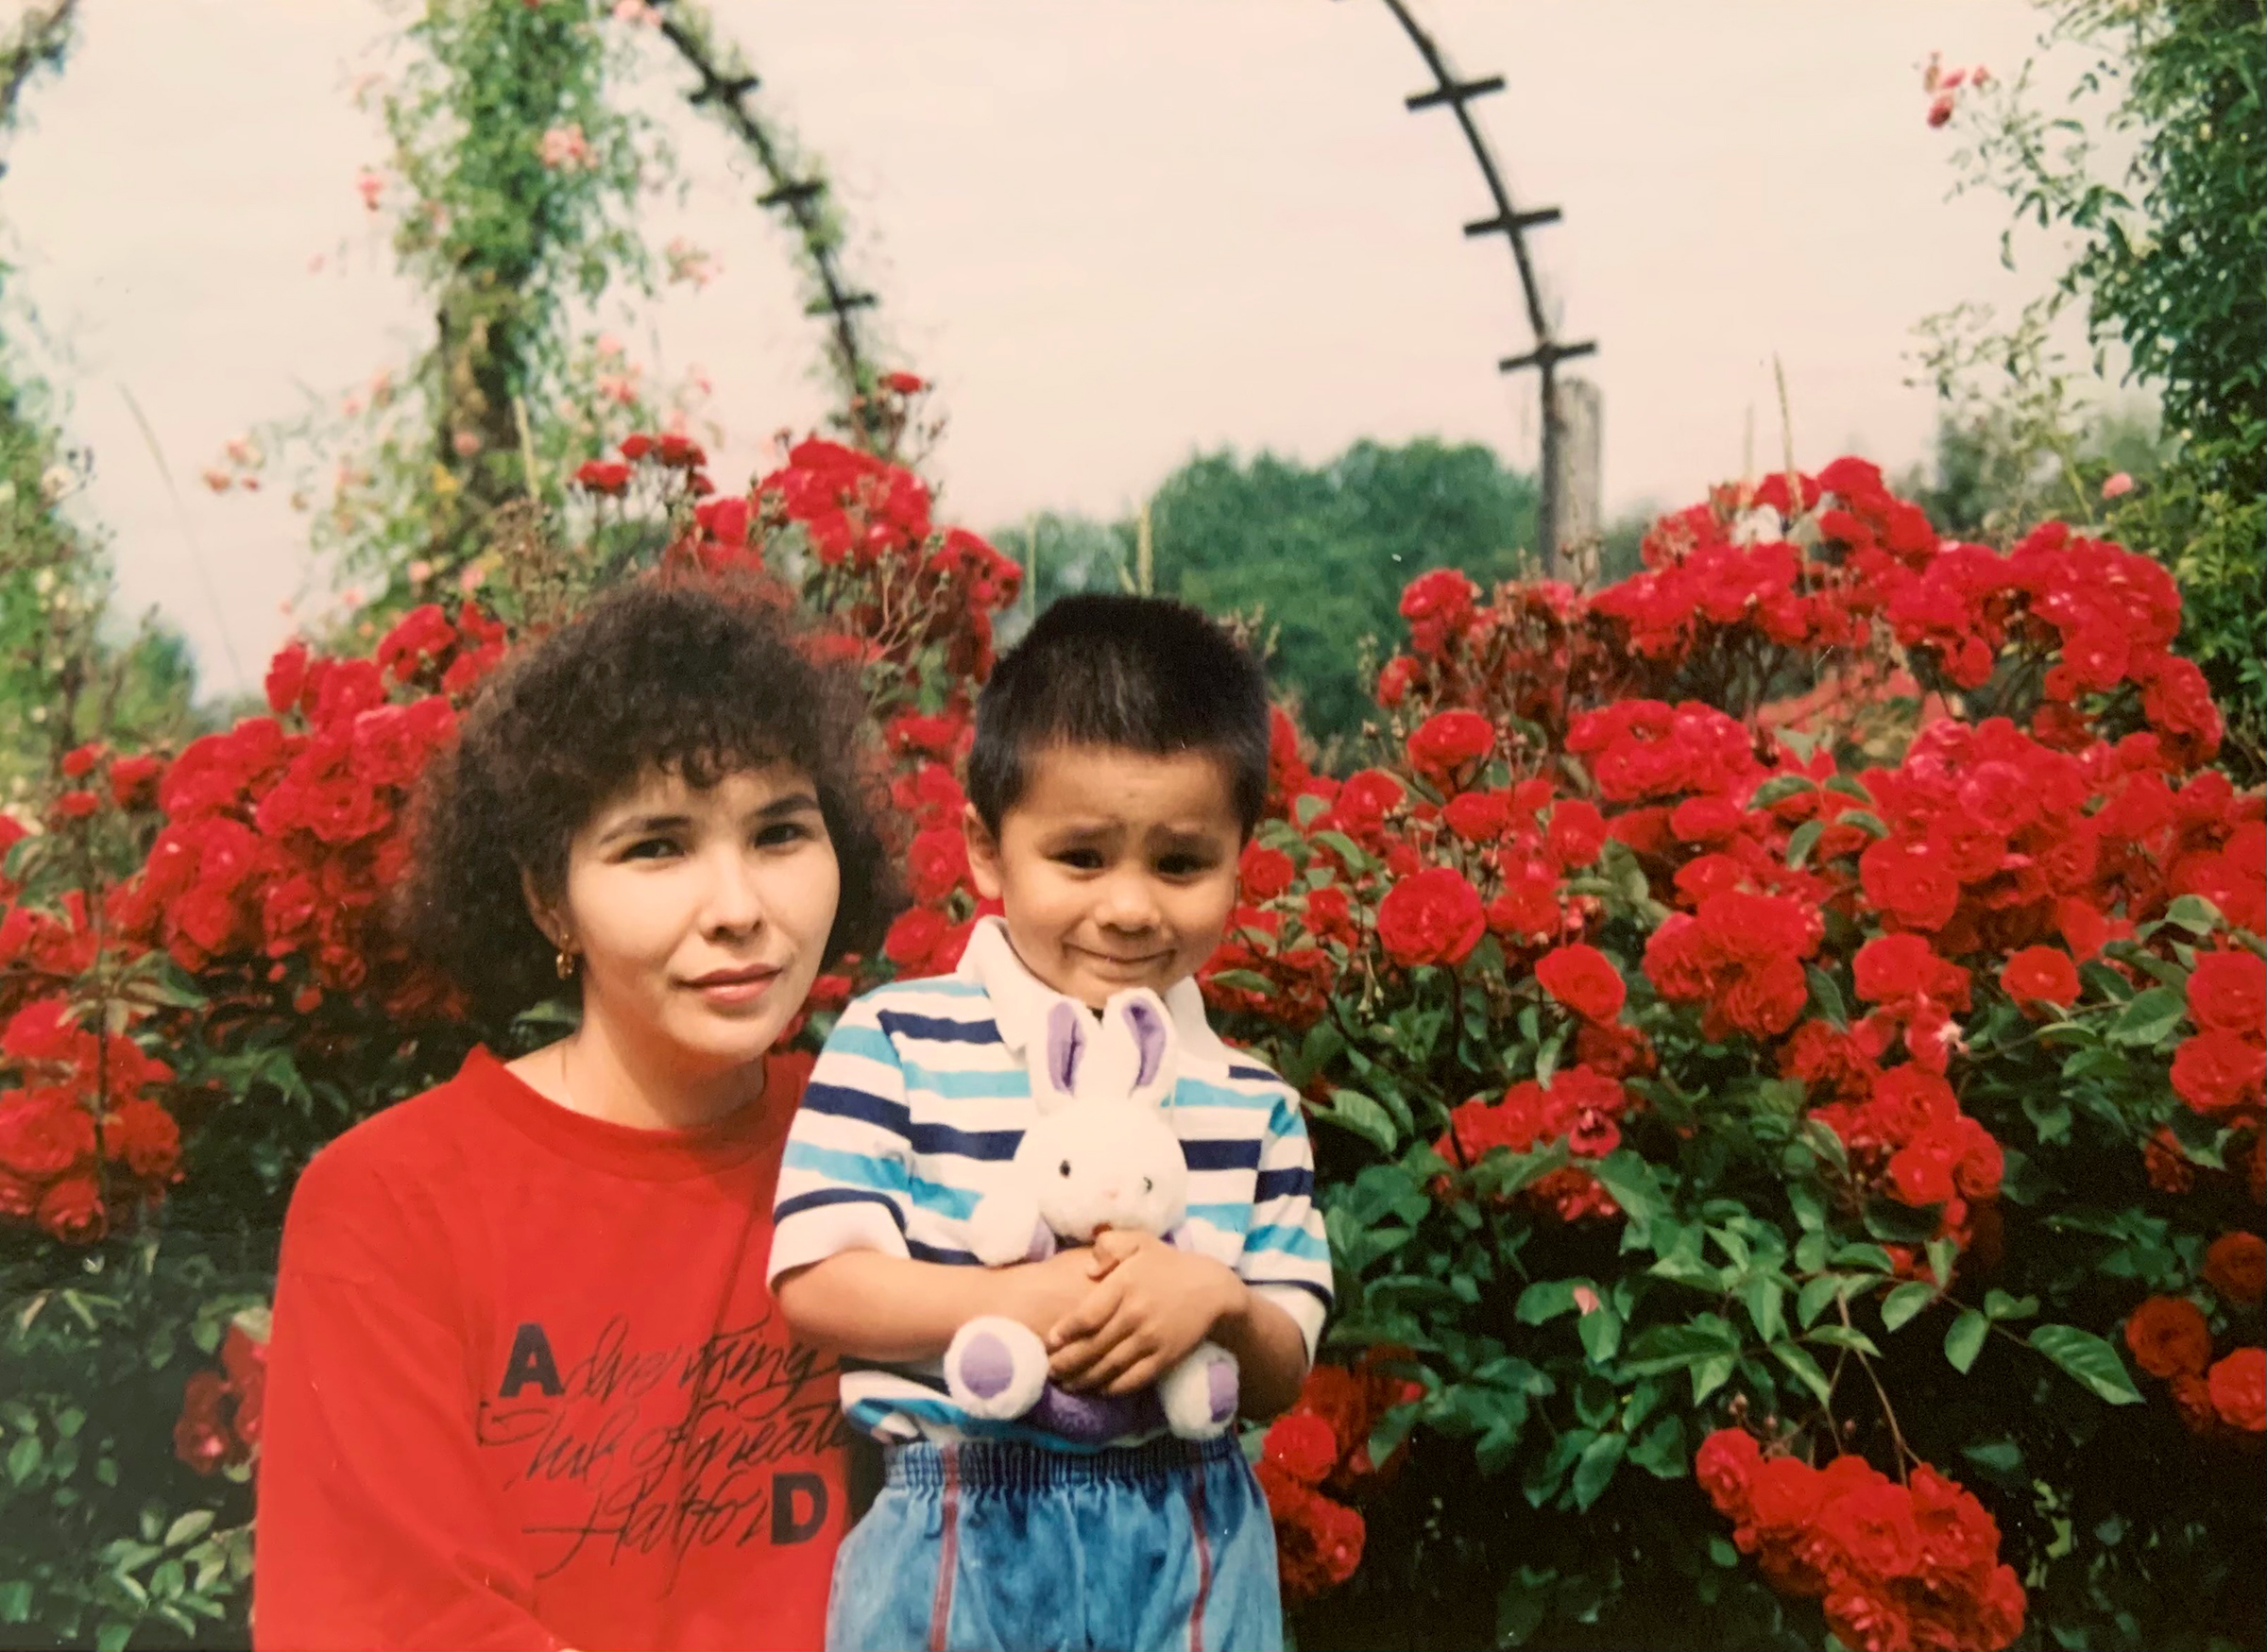 Vuong and his mother at Elizabeth Park in Hartford, Conn., circa 1992